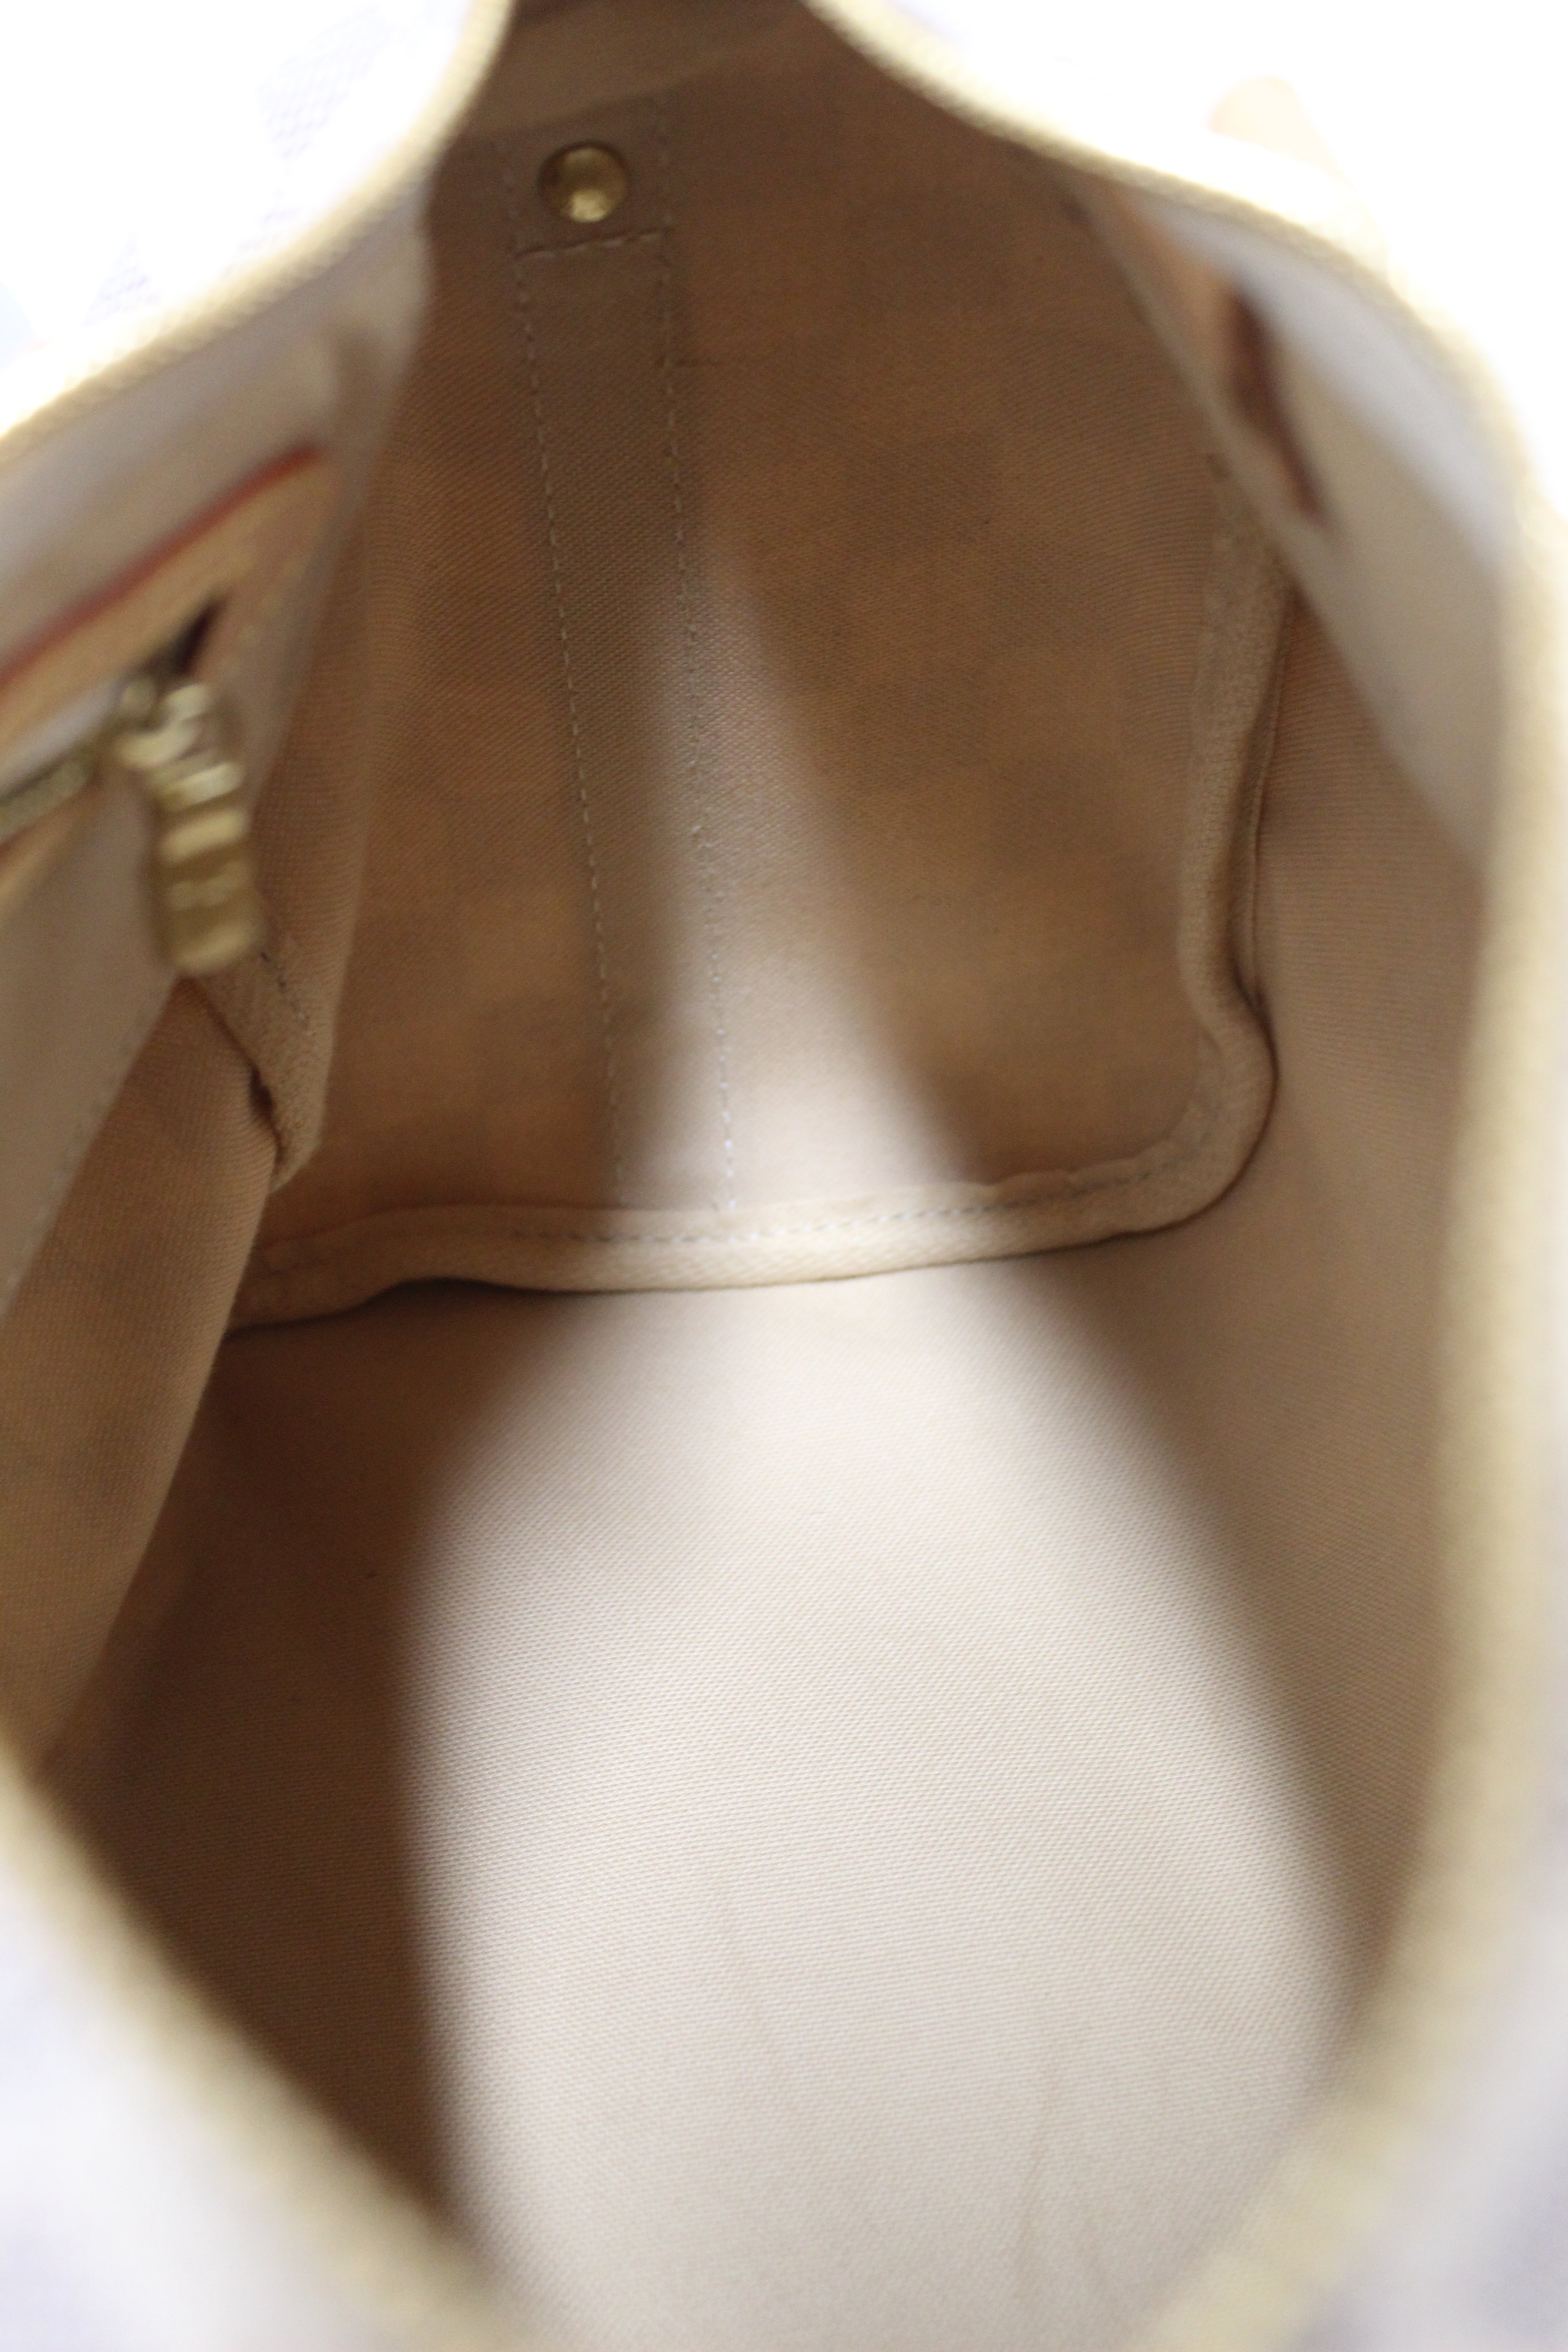 Louis Vuitton 2019 pre-owned Damier Azur Speedy Bandoulière 25 two-way bag  - ShopStyle